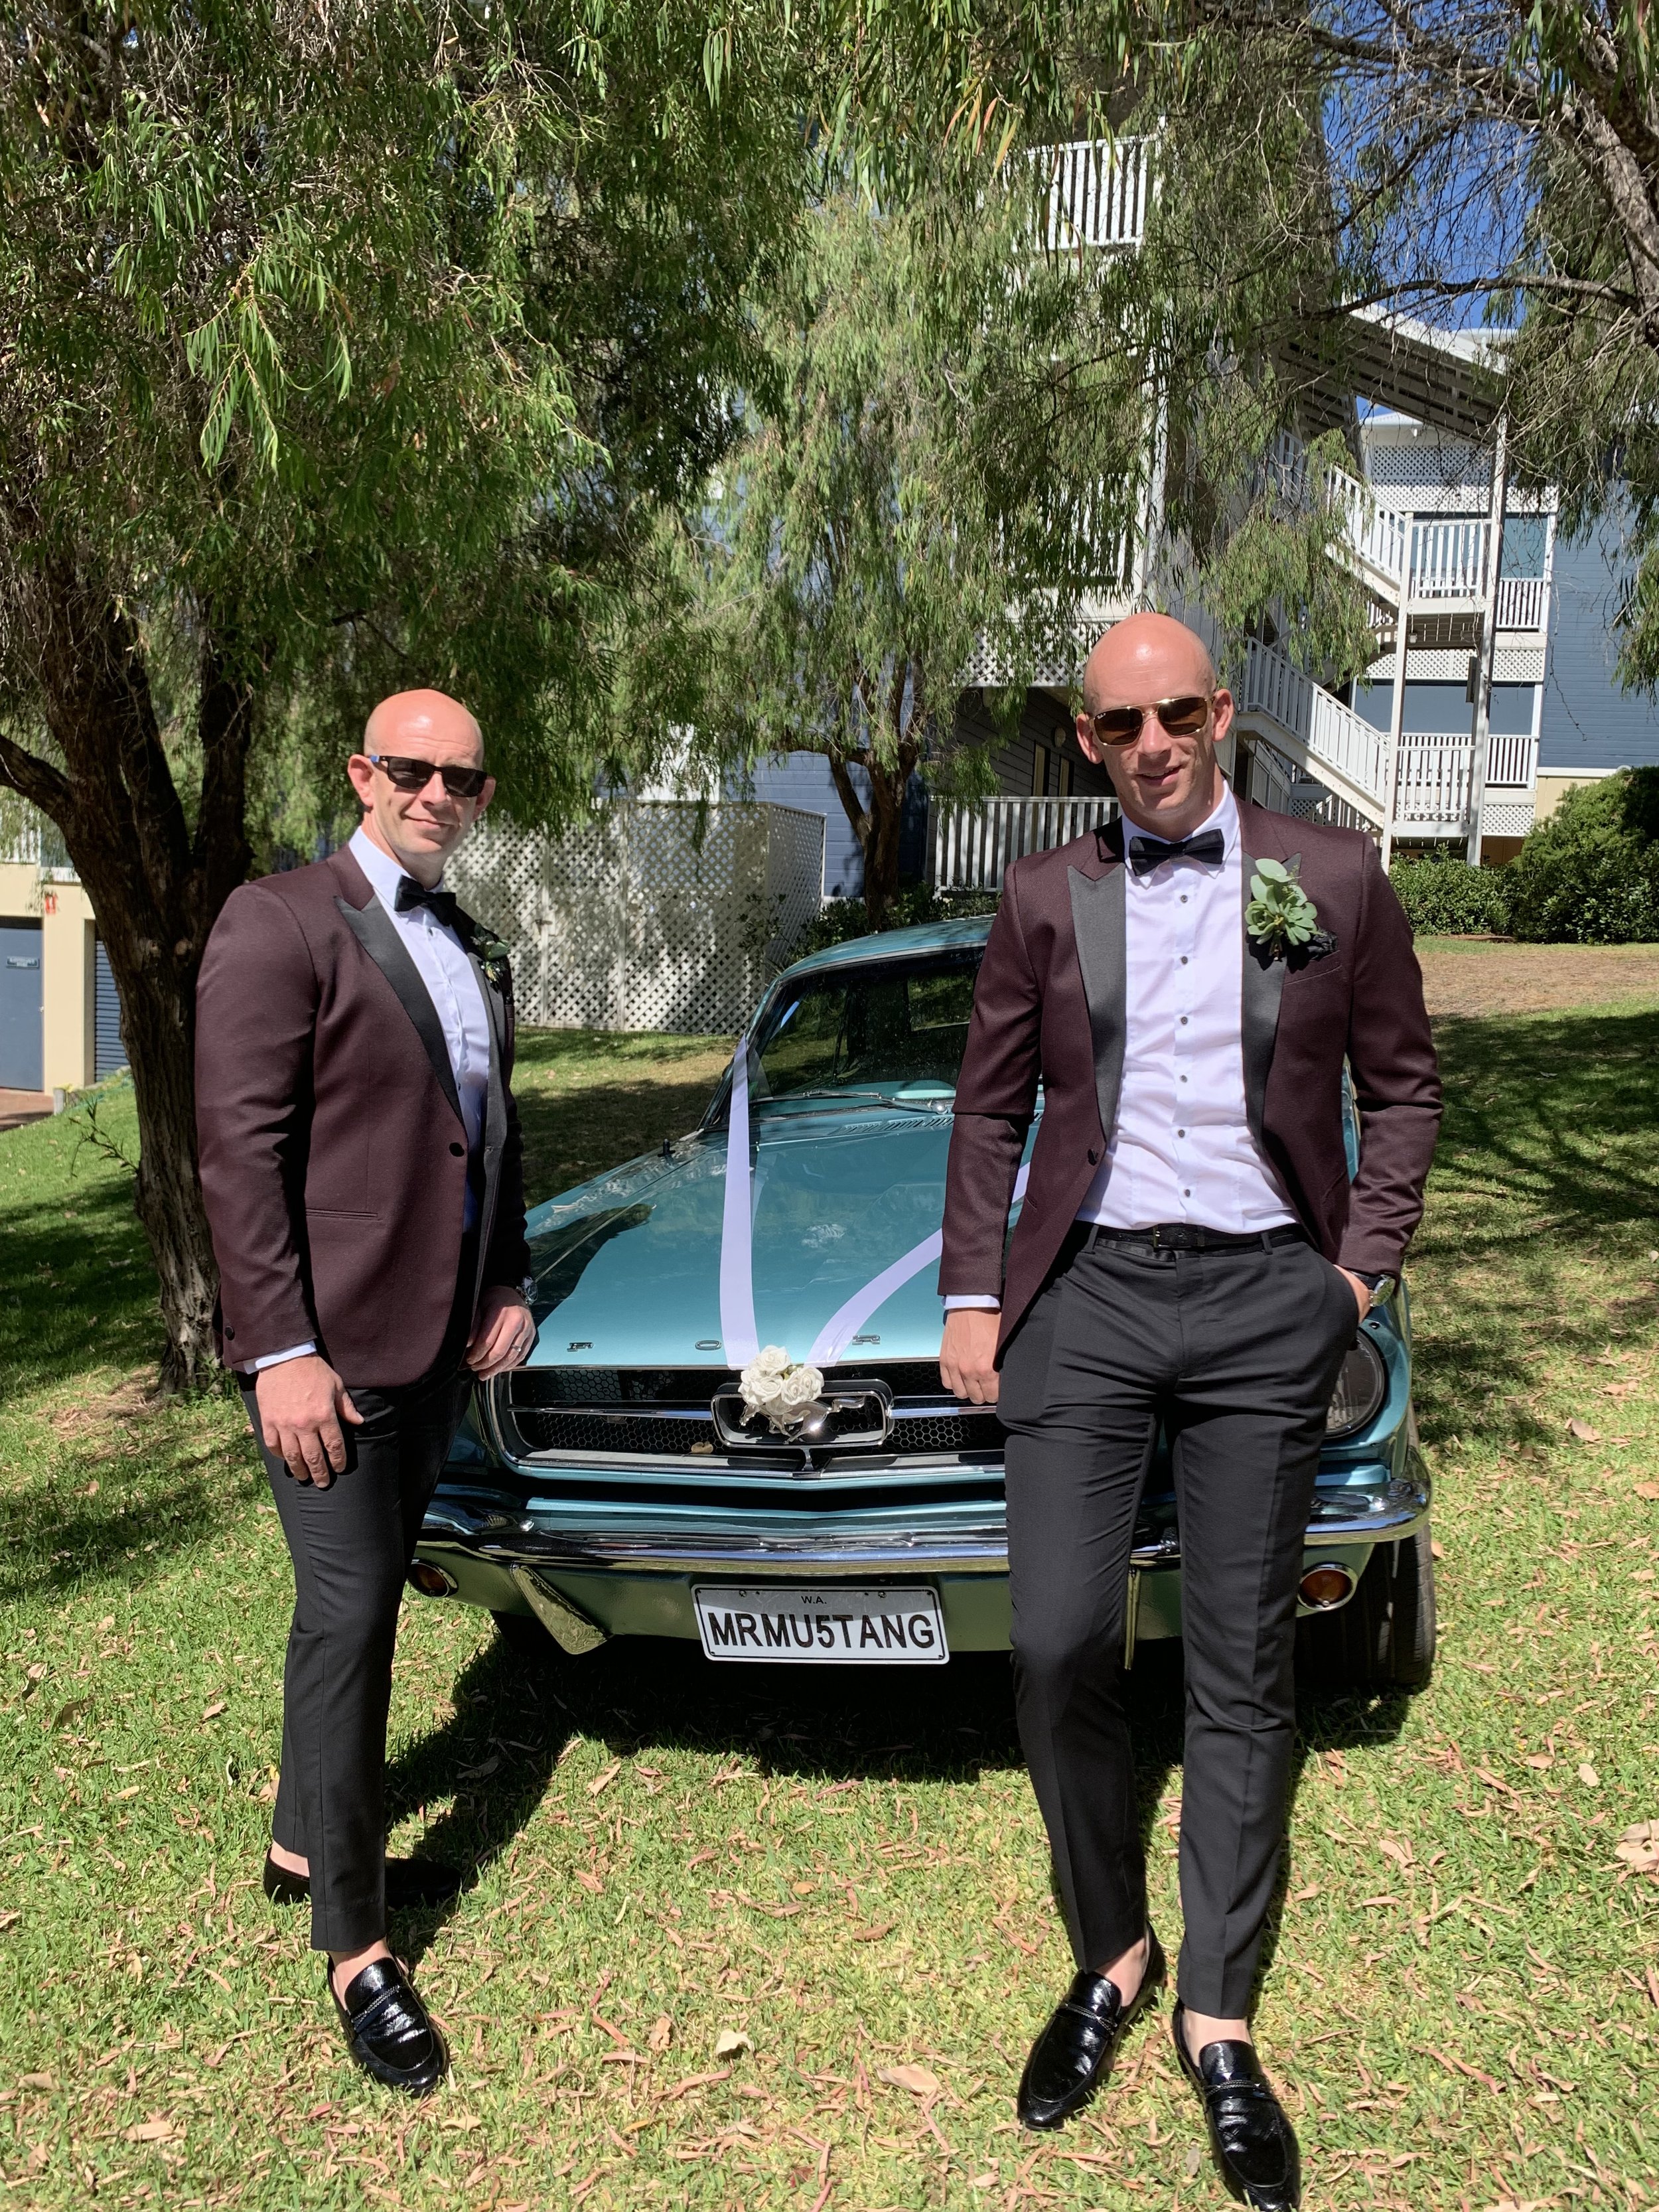 wedding-groom-mr mustang hire-classic car hire-maragret river.JPG